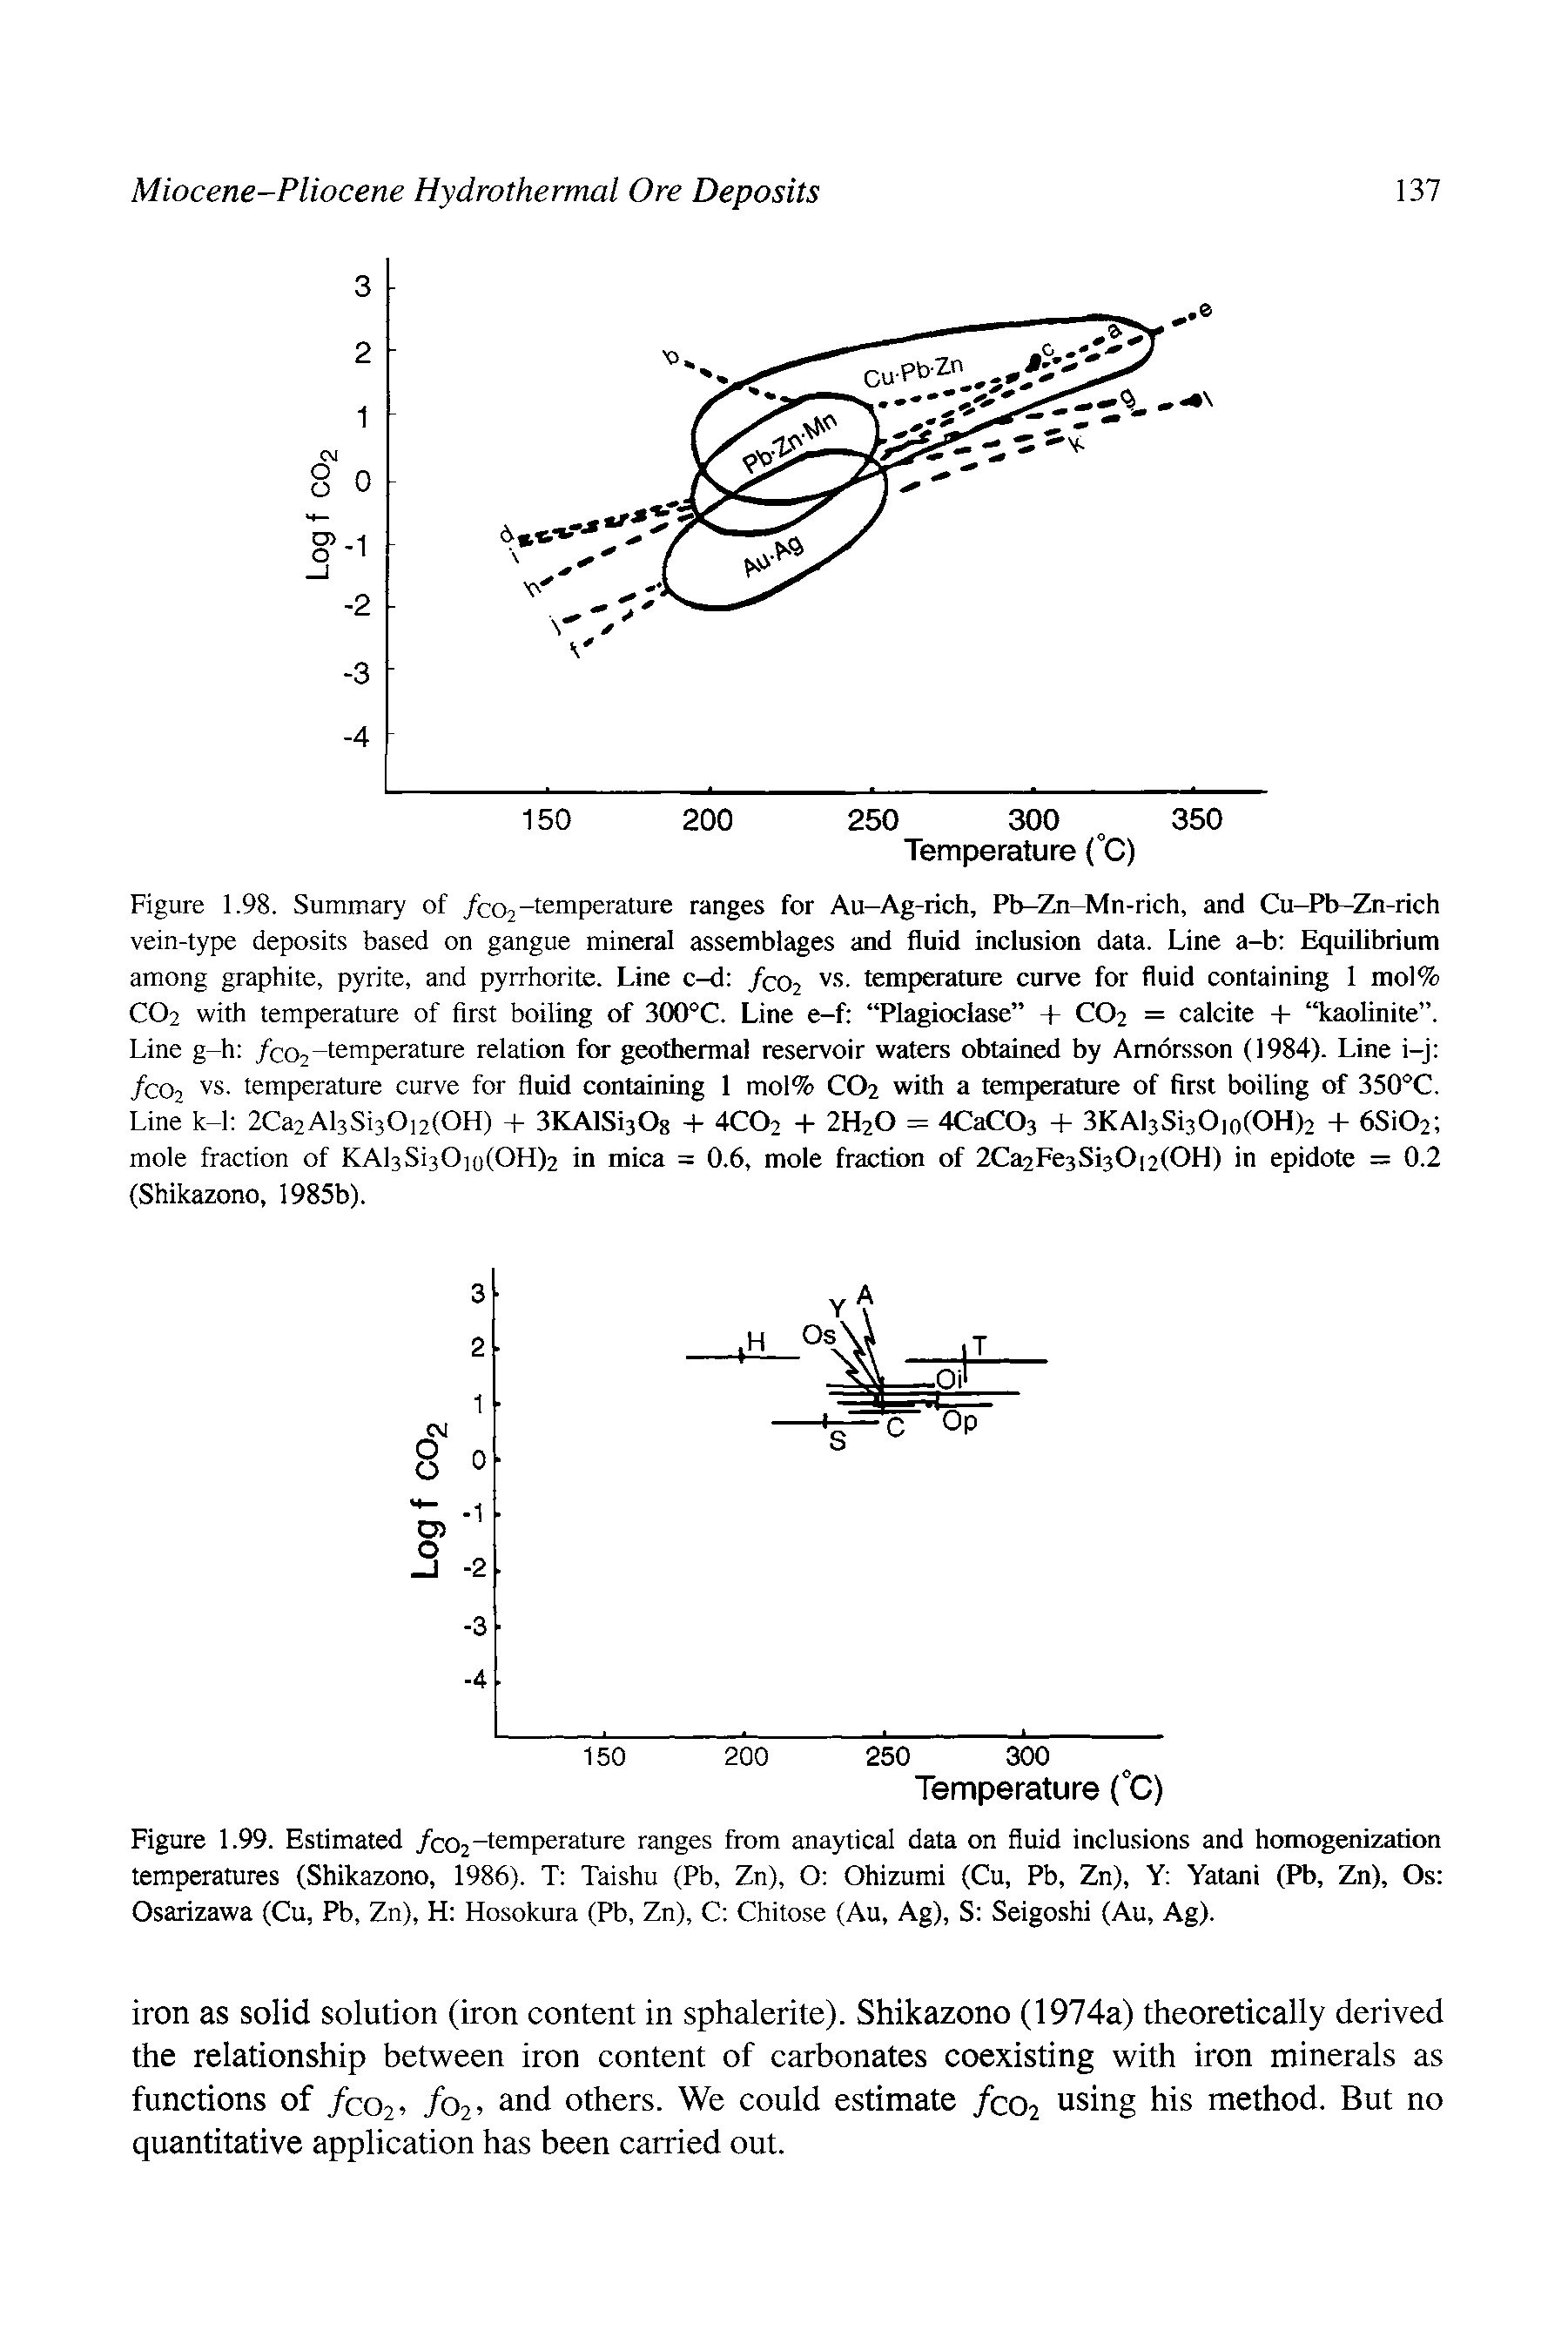 Figure 1.99. Estimated /CO2-temperature ranges from anaytical data on fluid inclusions and homogenization temperatures (Shikazono, 1986). T Taishu (Pb, Zn), O Ohizumi (Cu, Pb, Zn), Y Yatani (Pb, Zn), Os Osaiizawa (Cu, Pb, Zn), H Hosokura (Pb, Zn), C Chitose (Au, Ag), S Seigoshi (Au, Ag).